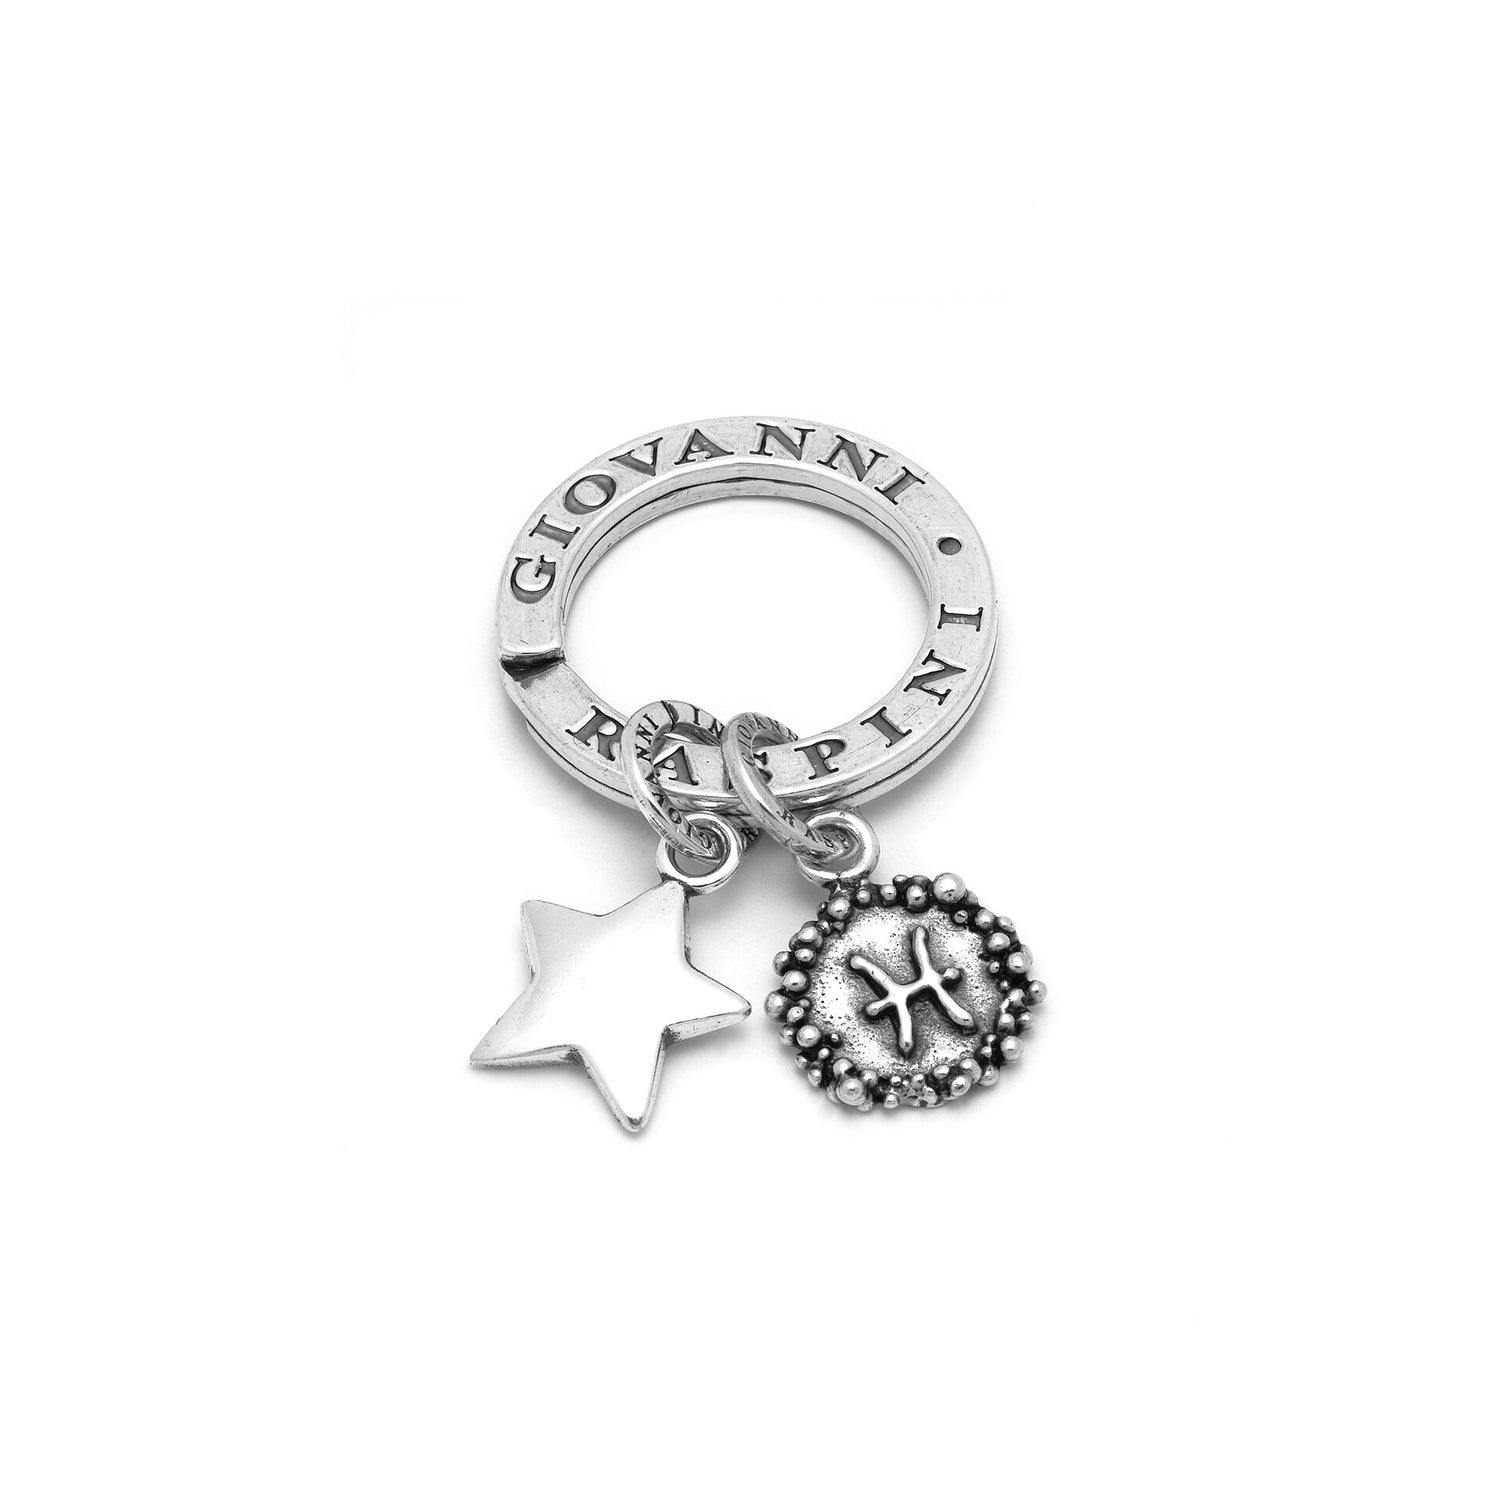 Giovanni Raspini Silver Horoscope Zodiac Sign Key Ring - Robert Anthony Jewellers, Edinburgh